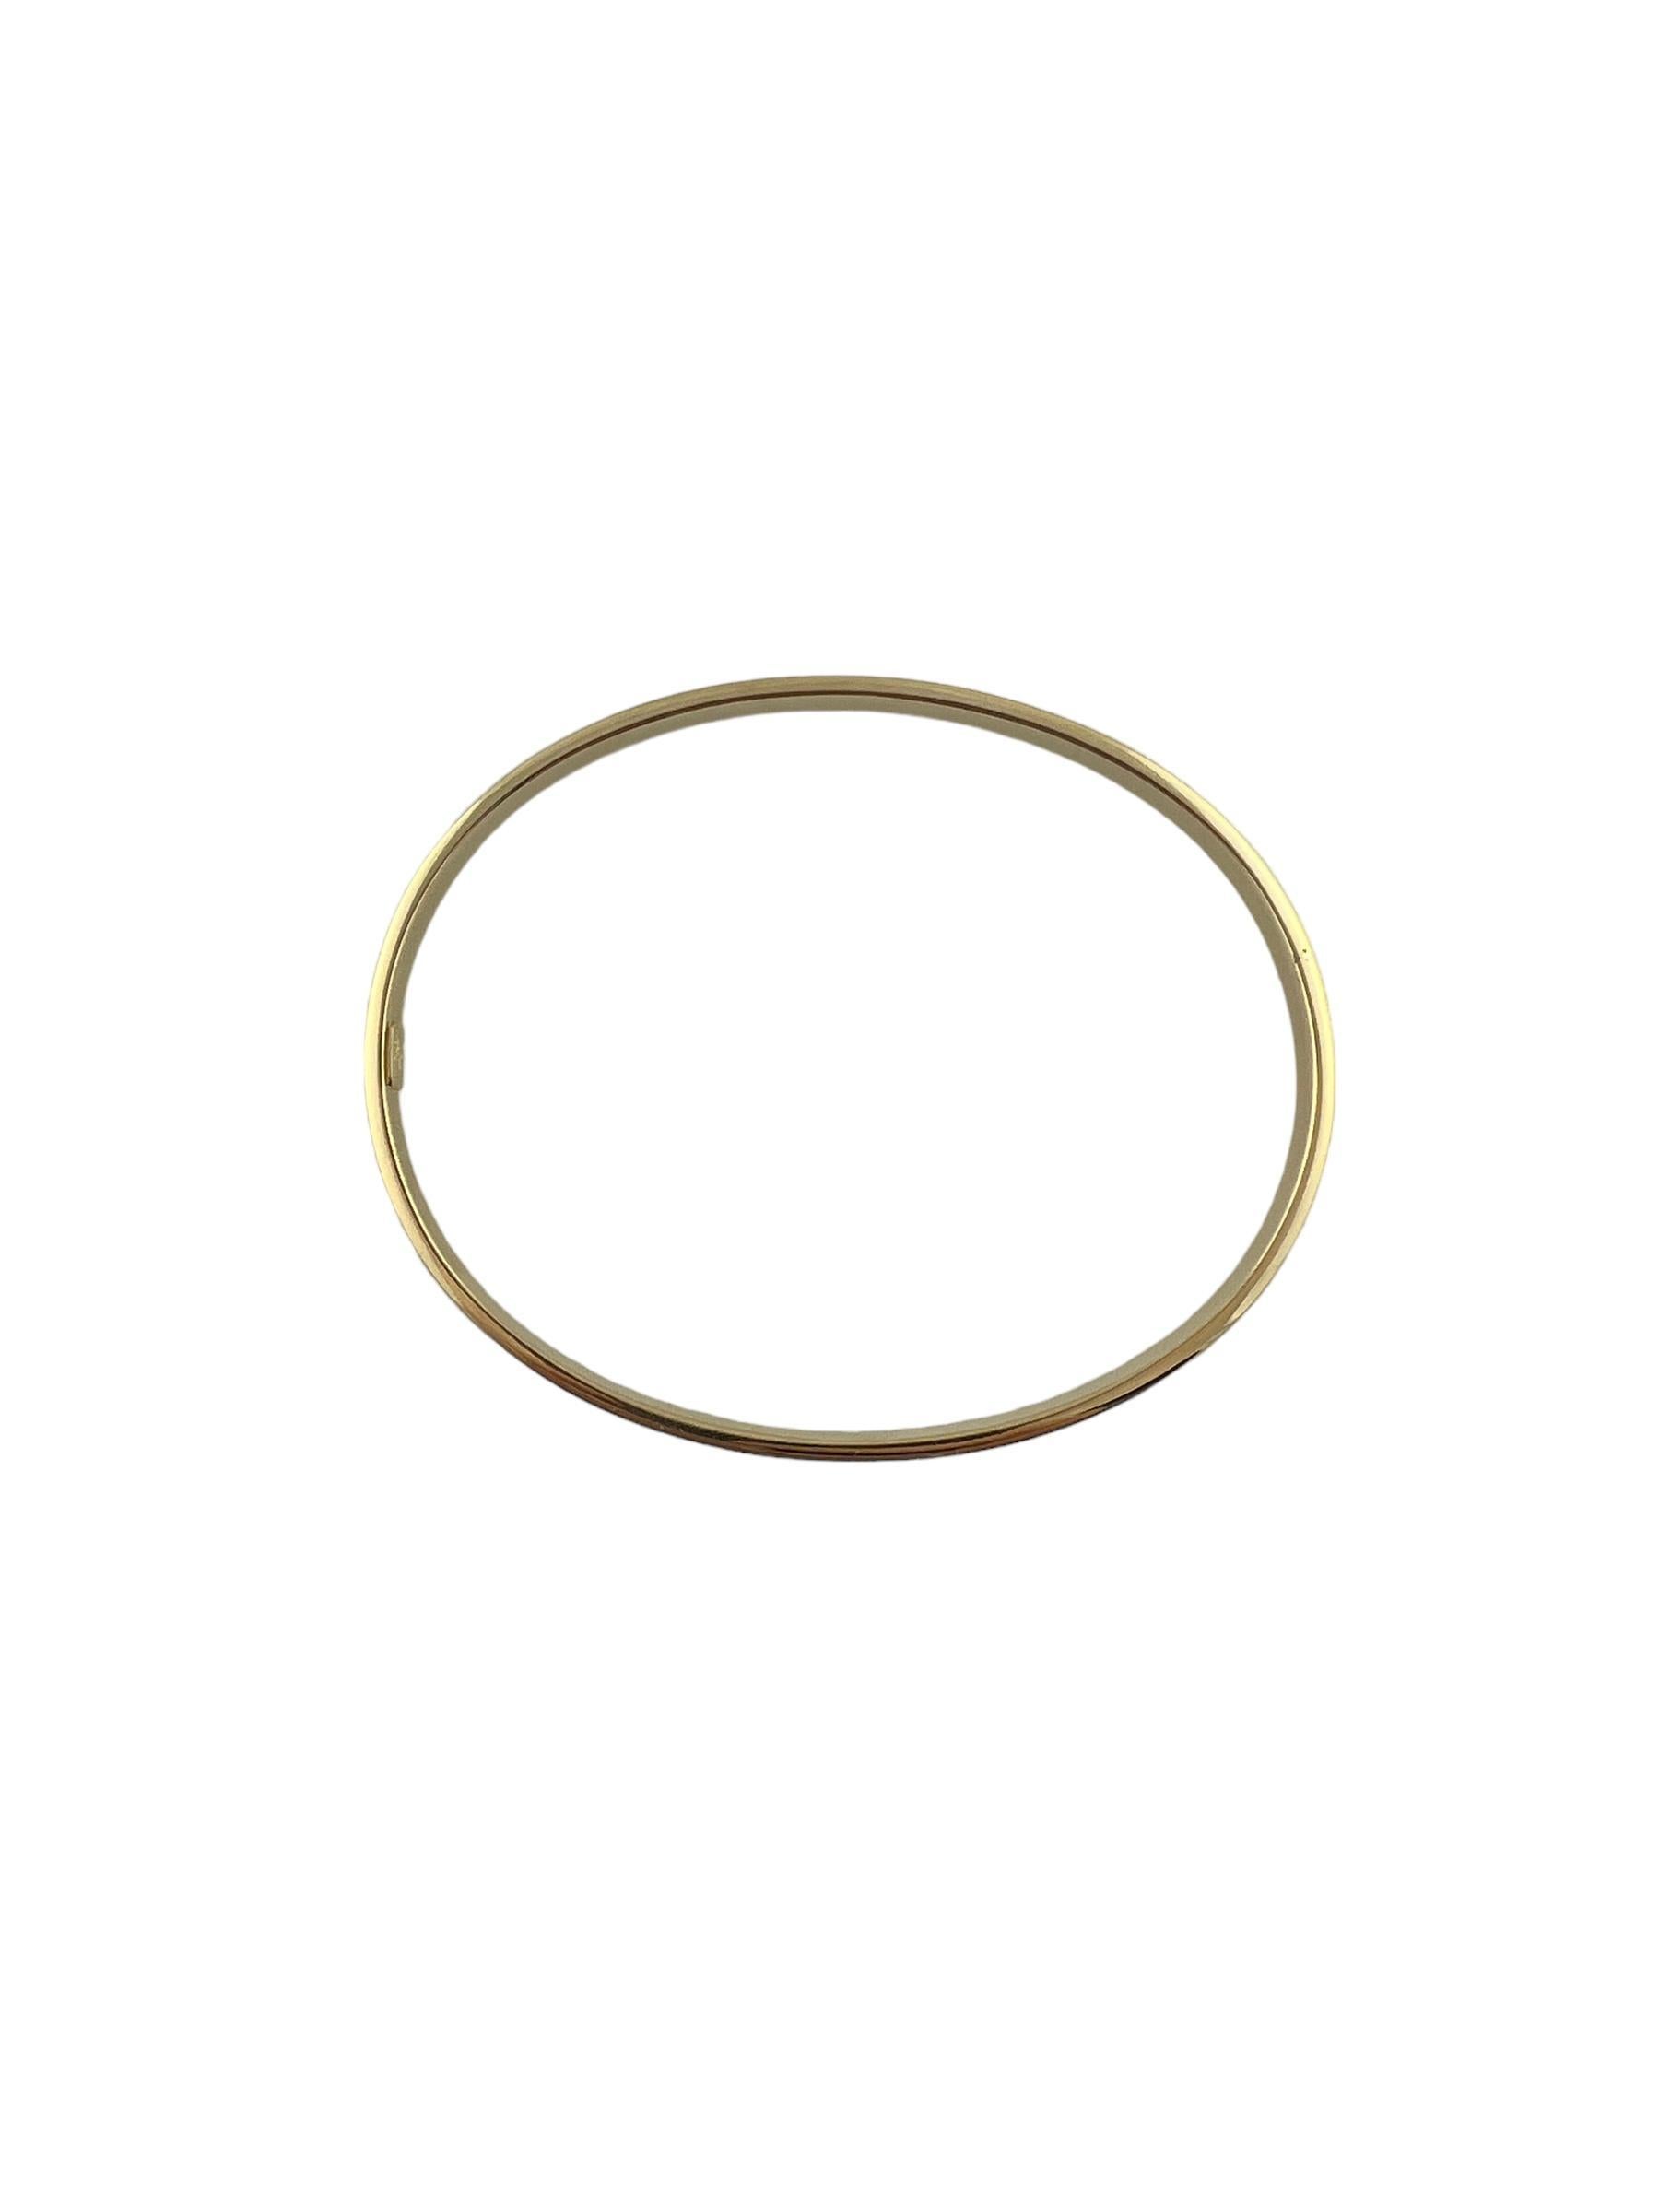 Tiffany & Co. 18K Yellow Gold Oval Bangle Bracelet #15735 1